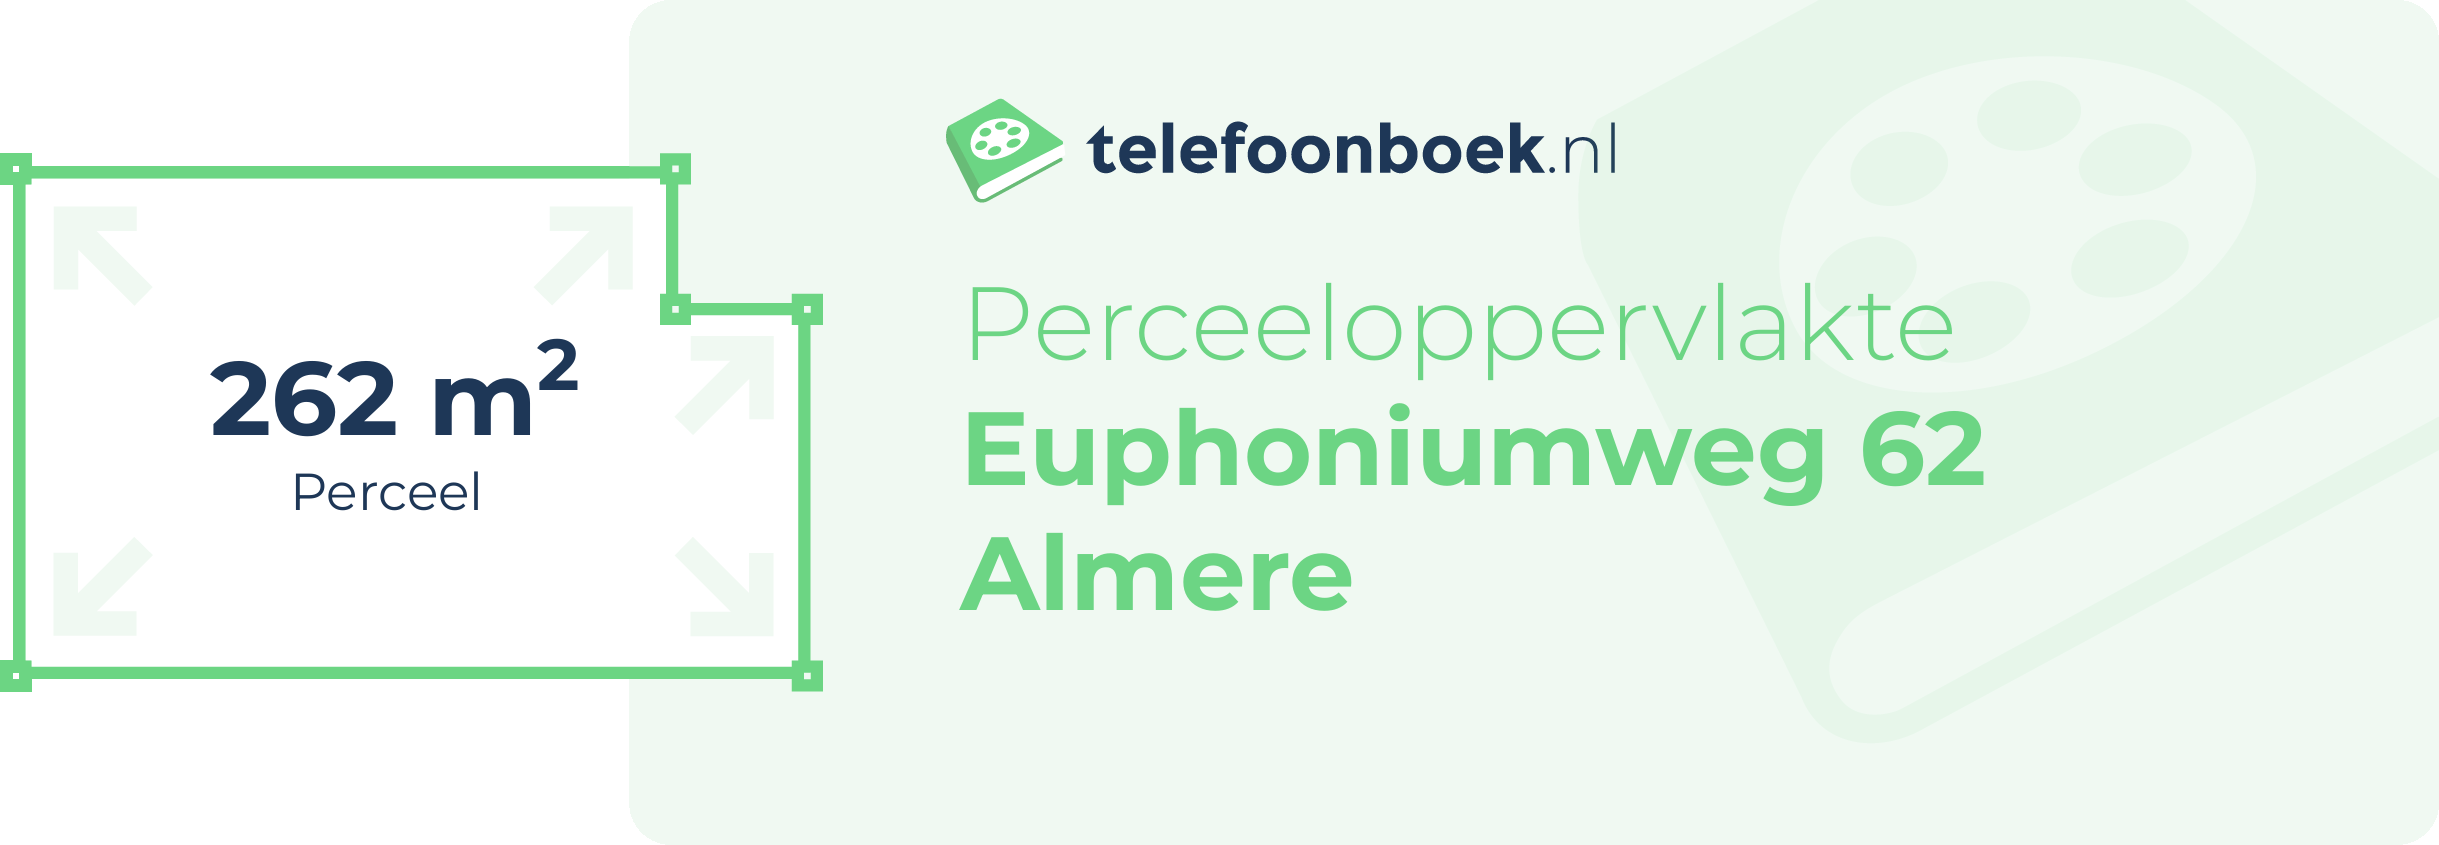 Perceeloppervlakte Euphoniumweg 62 Almere